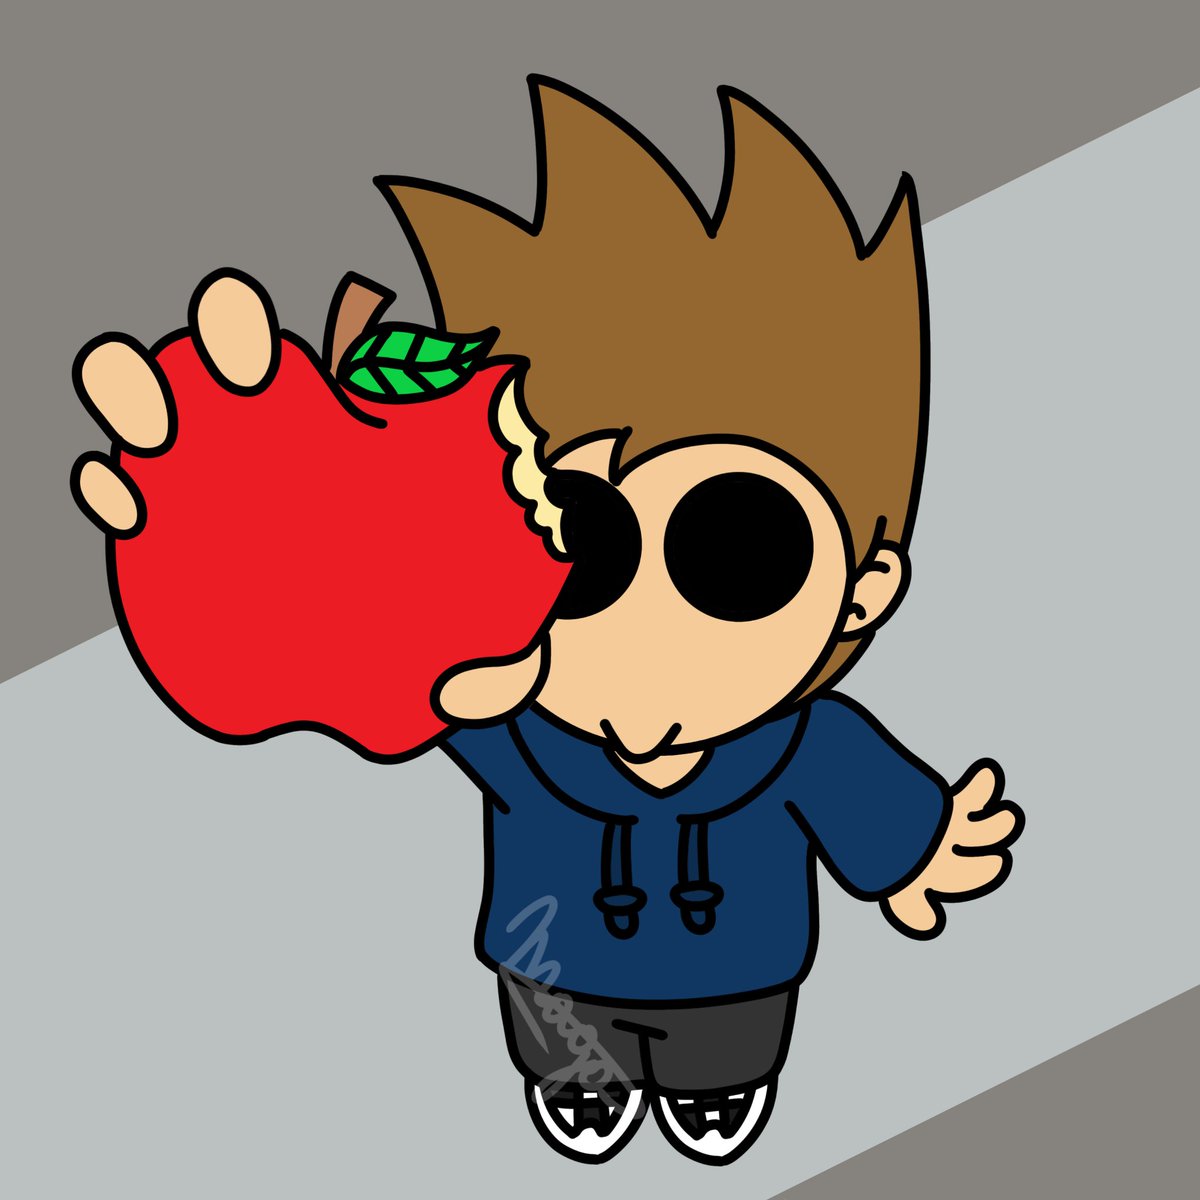 Little Tom shares his apple with you, will you?  
#eddsworld #eddsworldfanart #Eddsworldtom